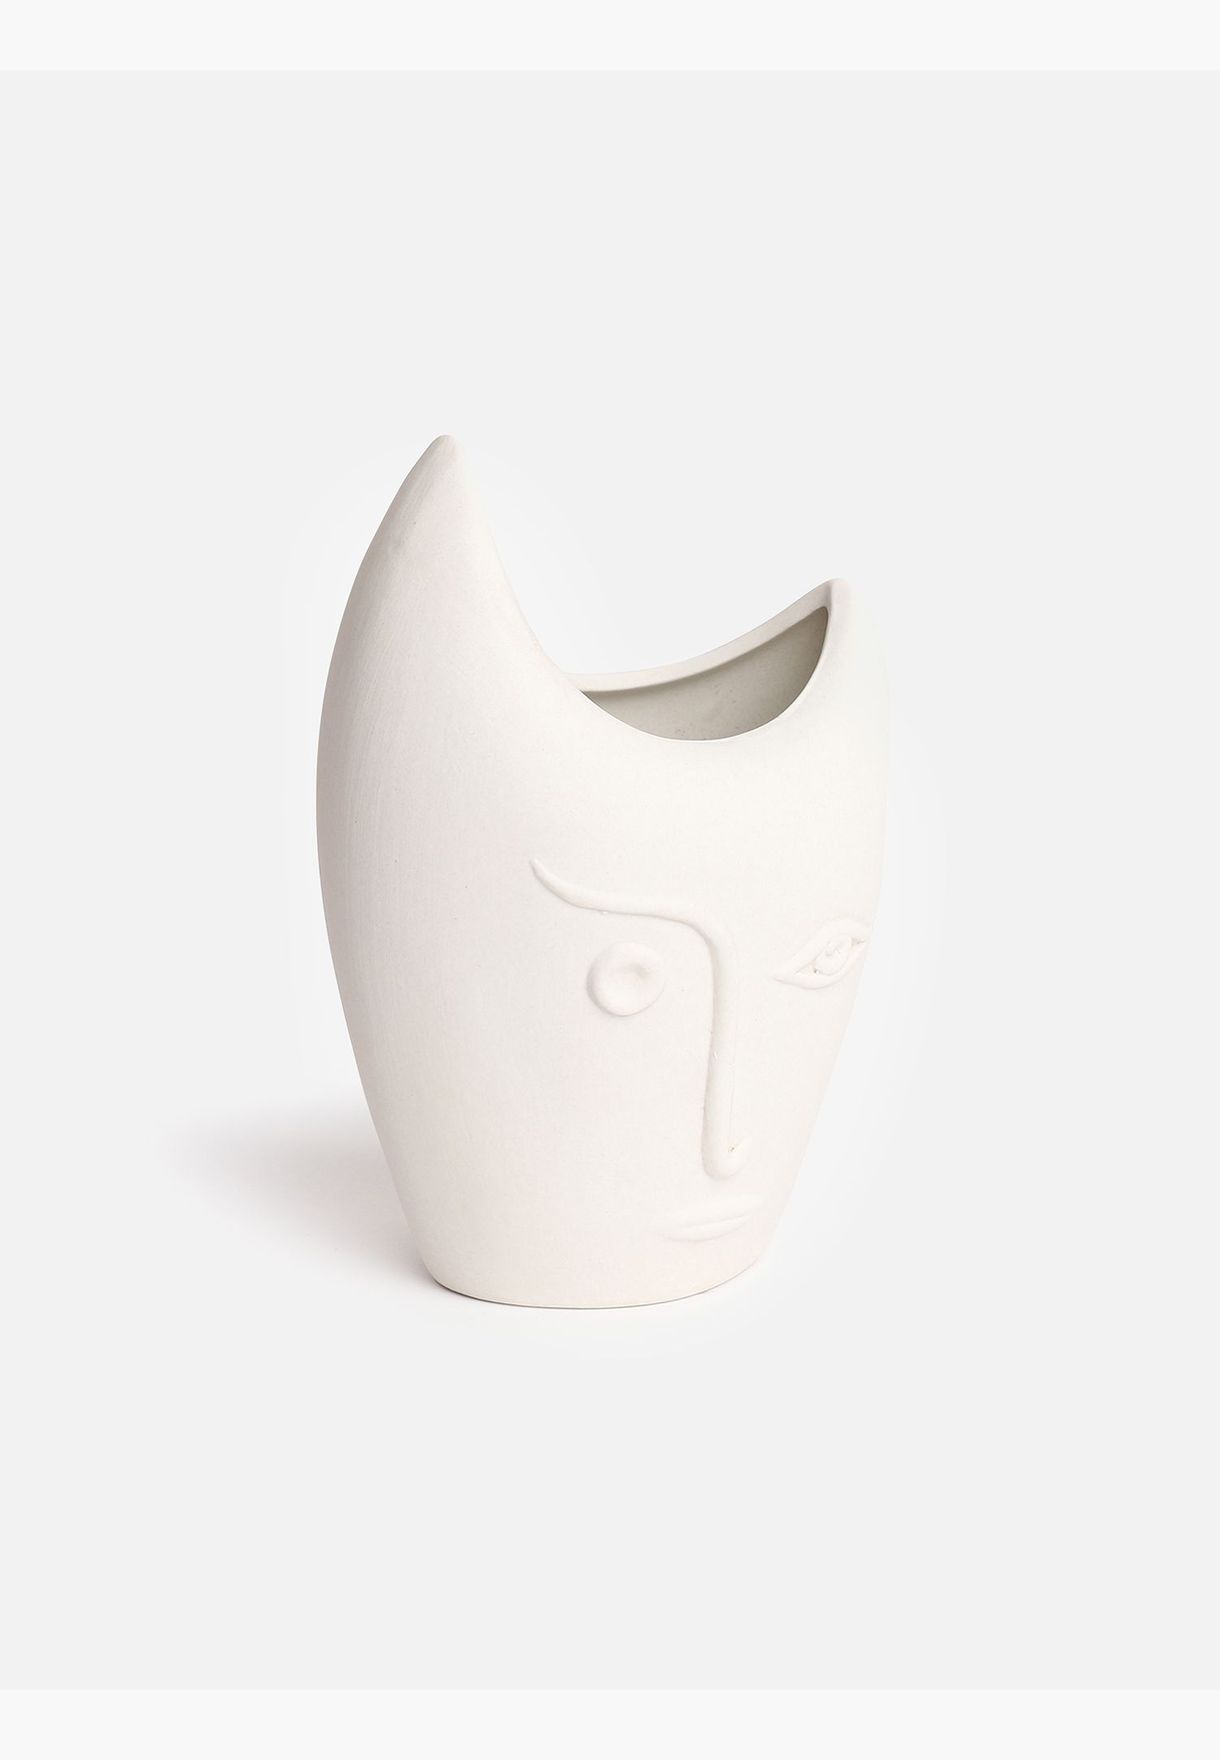 Man Face Shaped Minimalistic Modern Ceramic Vase For Home Decor